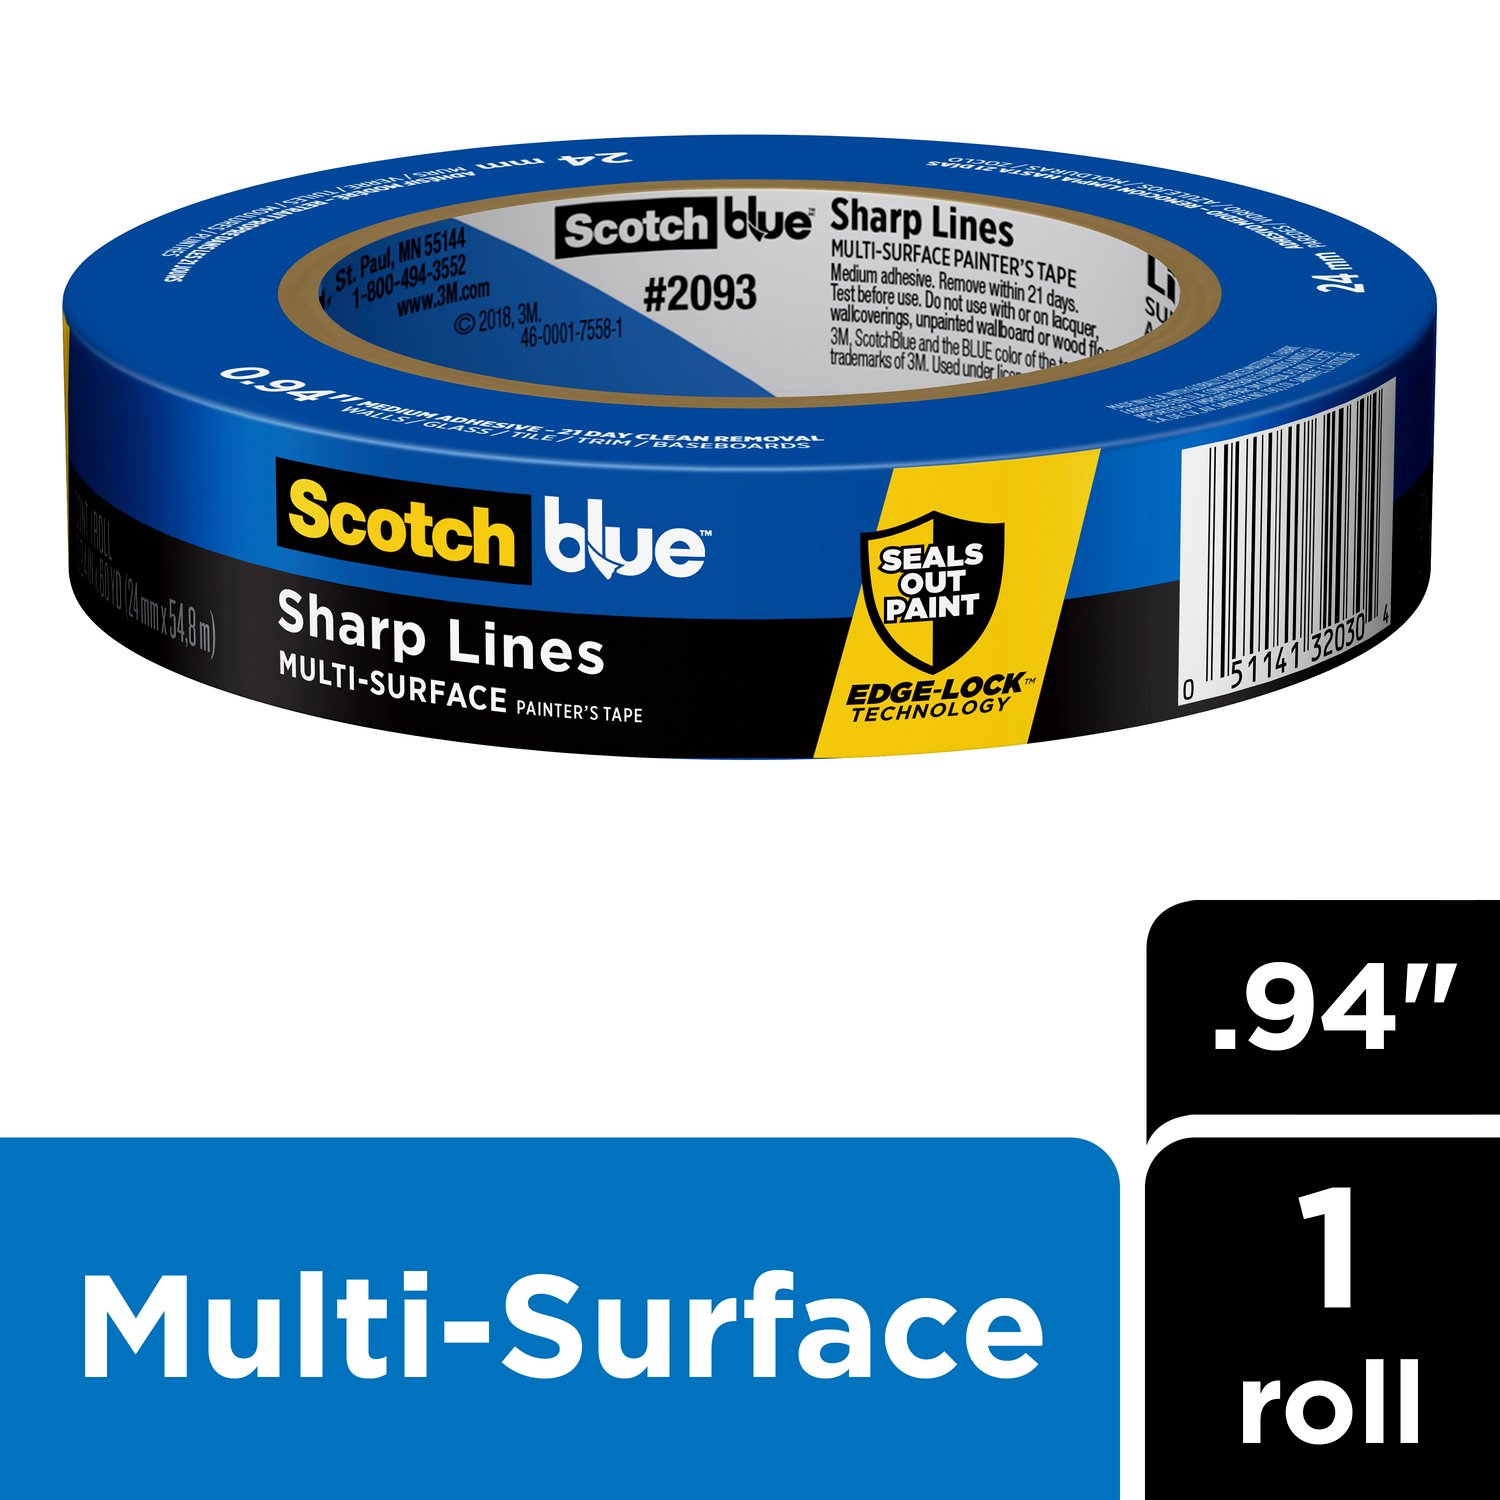 7100185011 - ScotchBlue Sharp Lines Painter's Tape 2093-24EC, 0.94 in x 60 yd (24mm
x 54,8m)